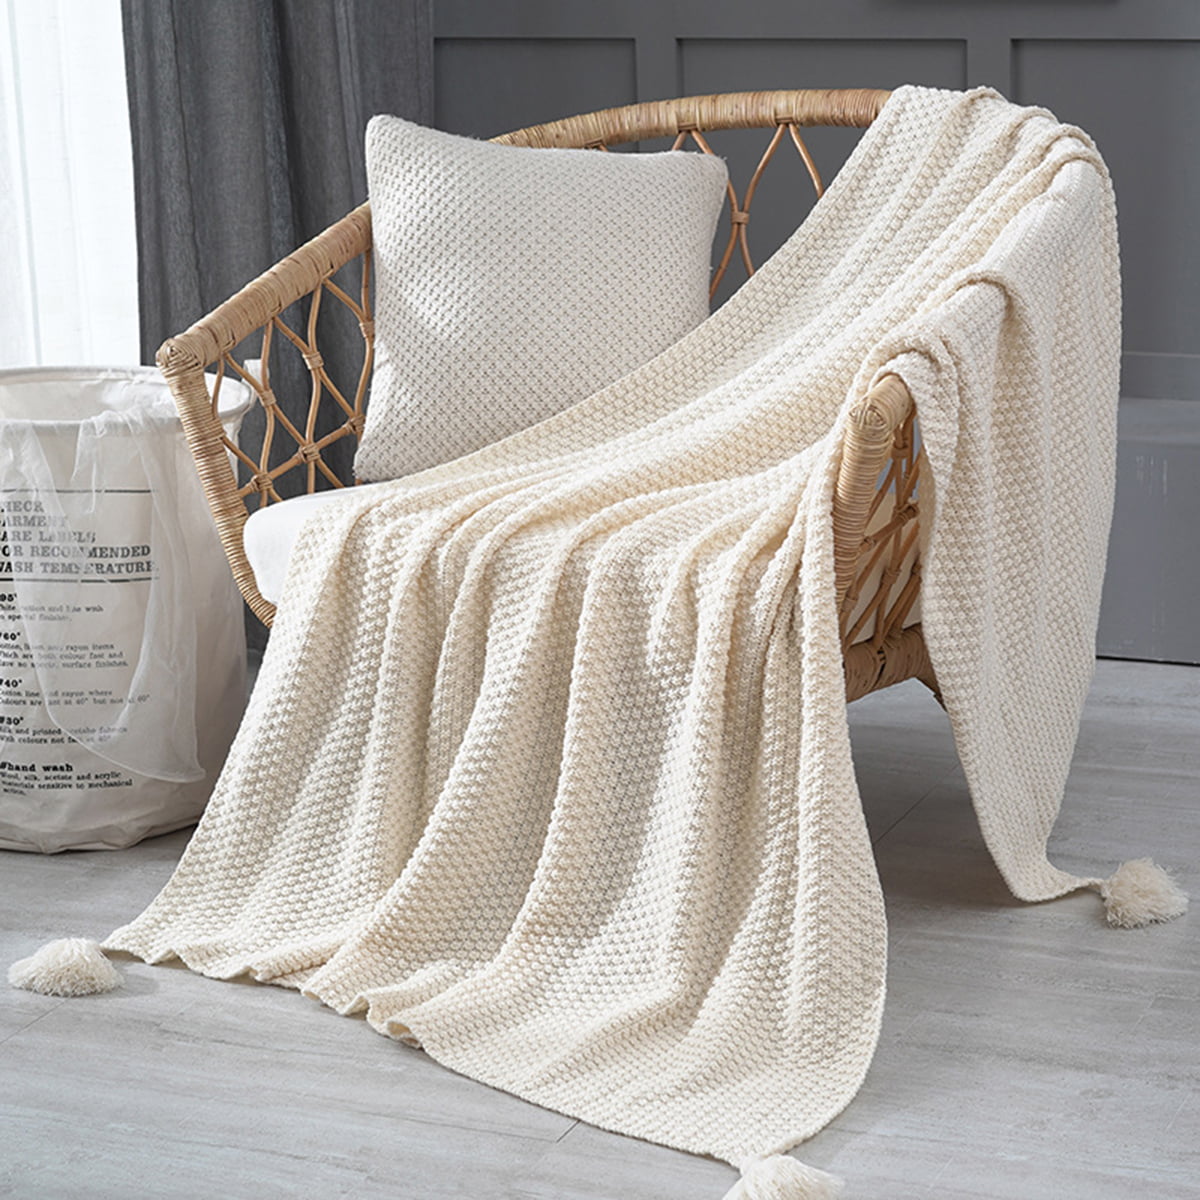 Tassel Blanket Fashion Knitted Blankets For Beds Fur Ball Knit Blanket Sofa Bedding Throw Blanket 47259 Walmart Canada